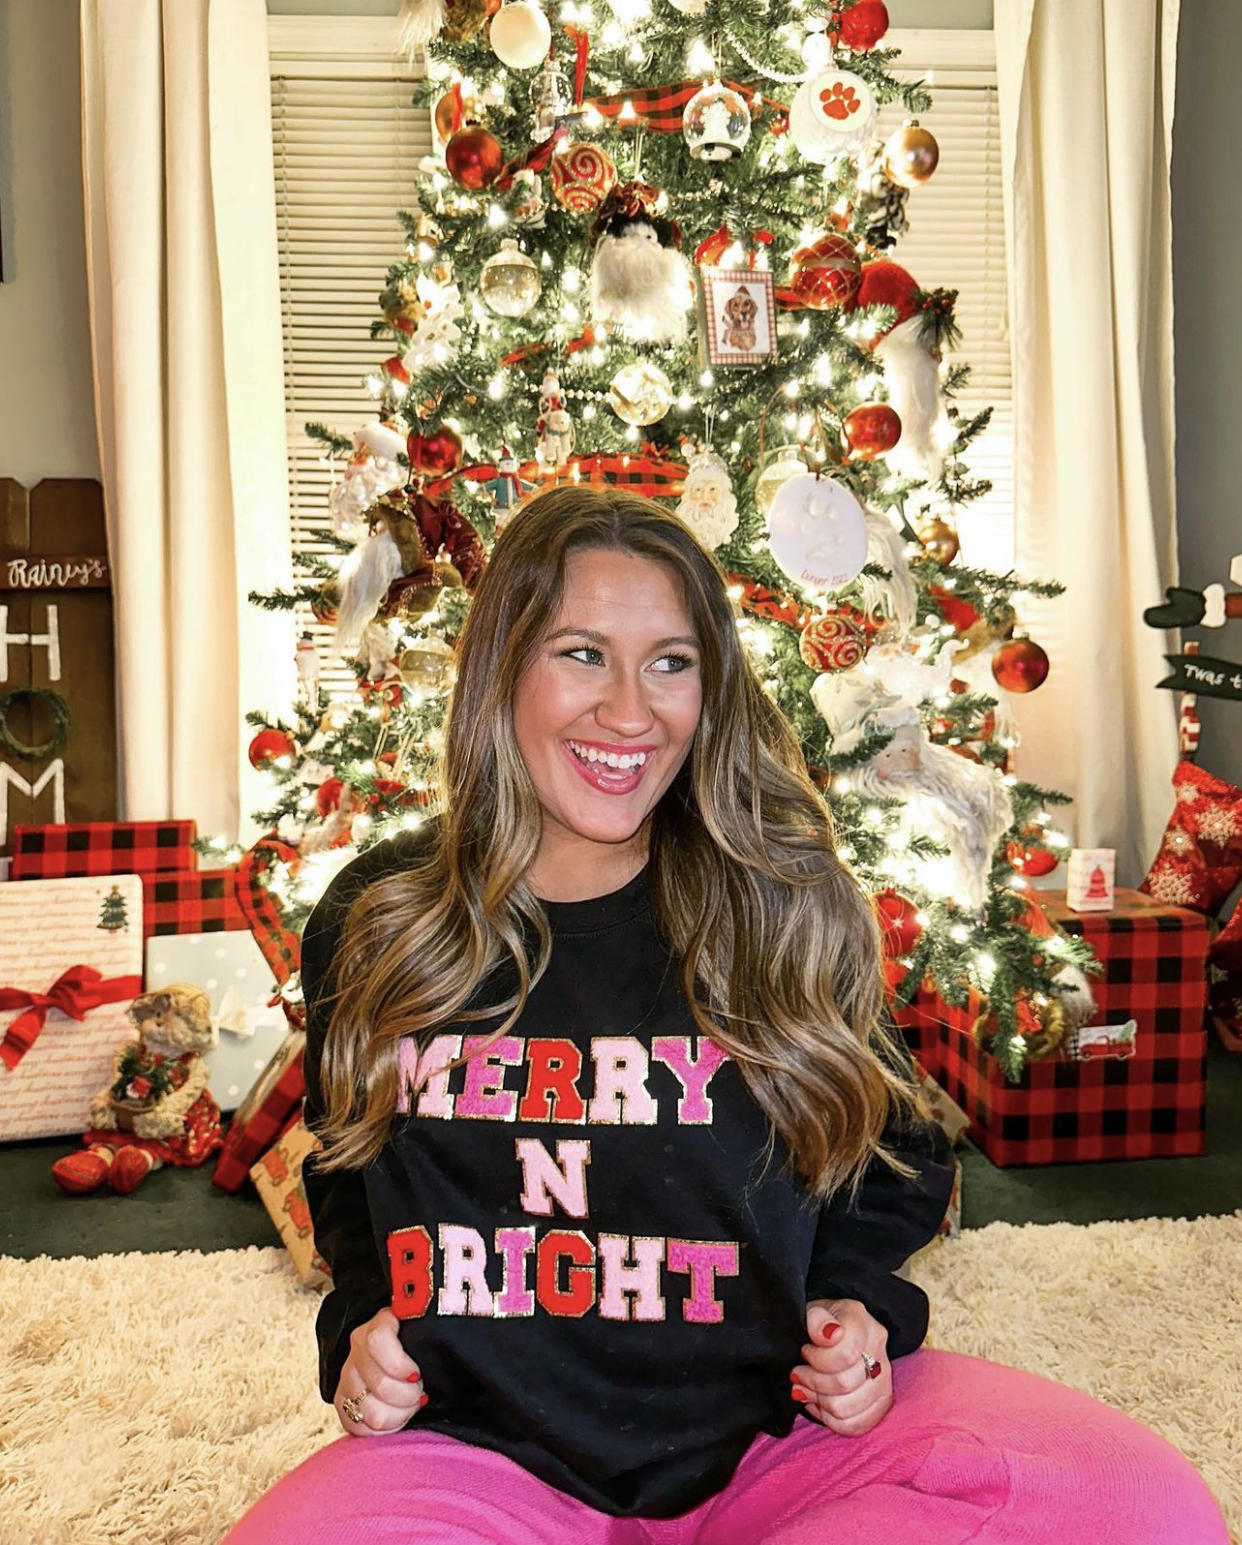 Merry N Bright Letter Patch Crewneck Sweatshirt